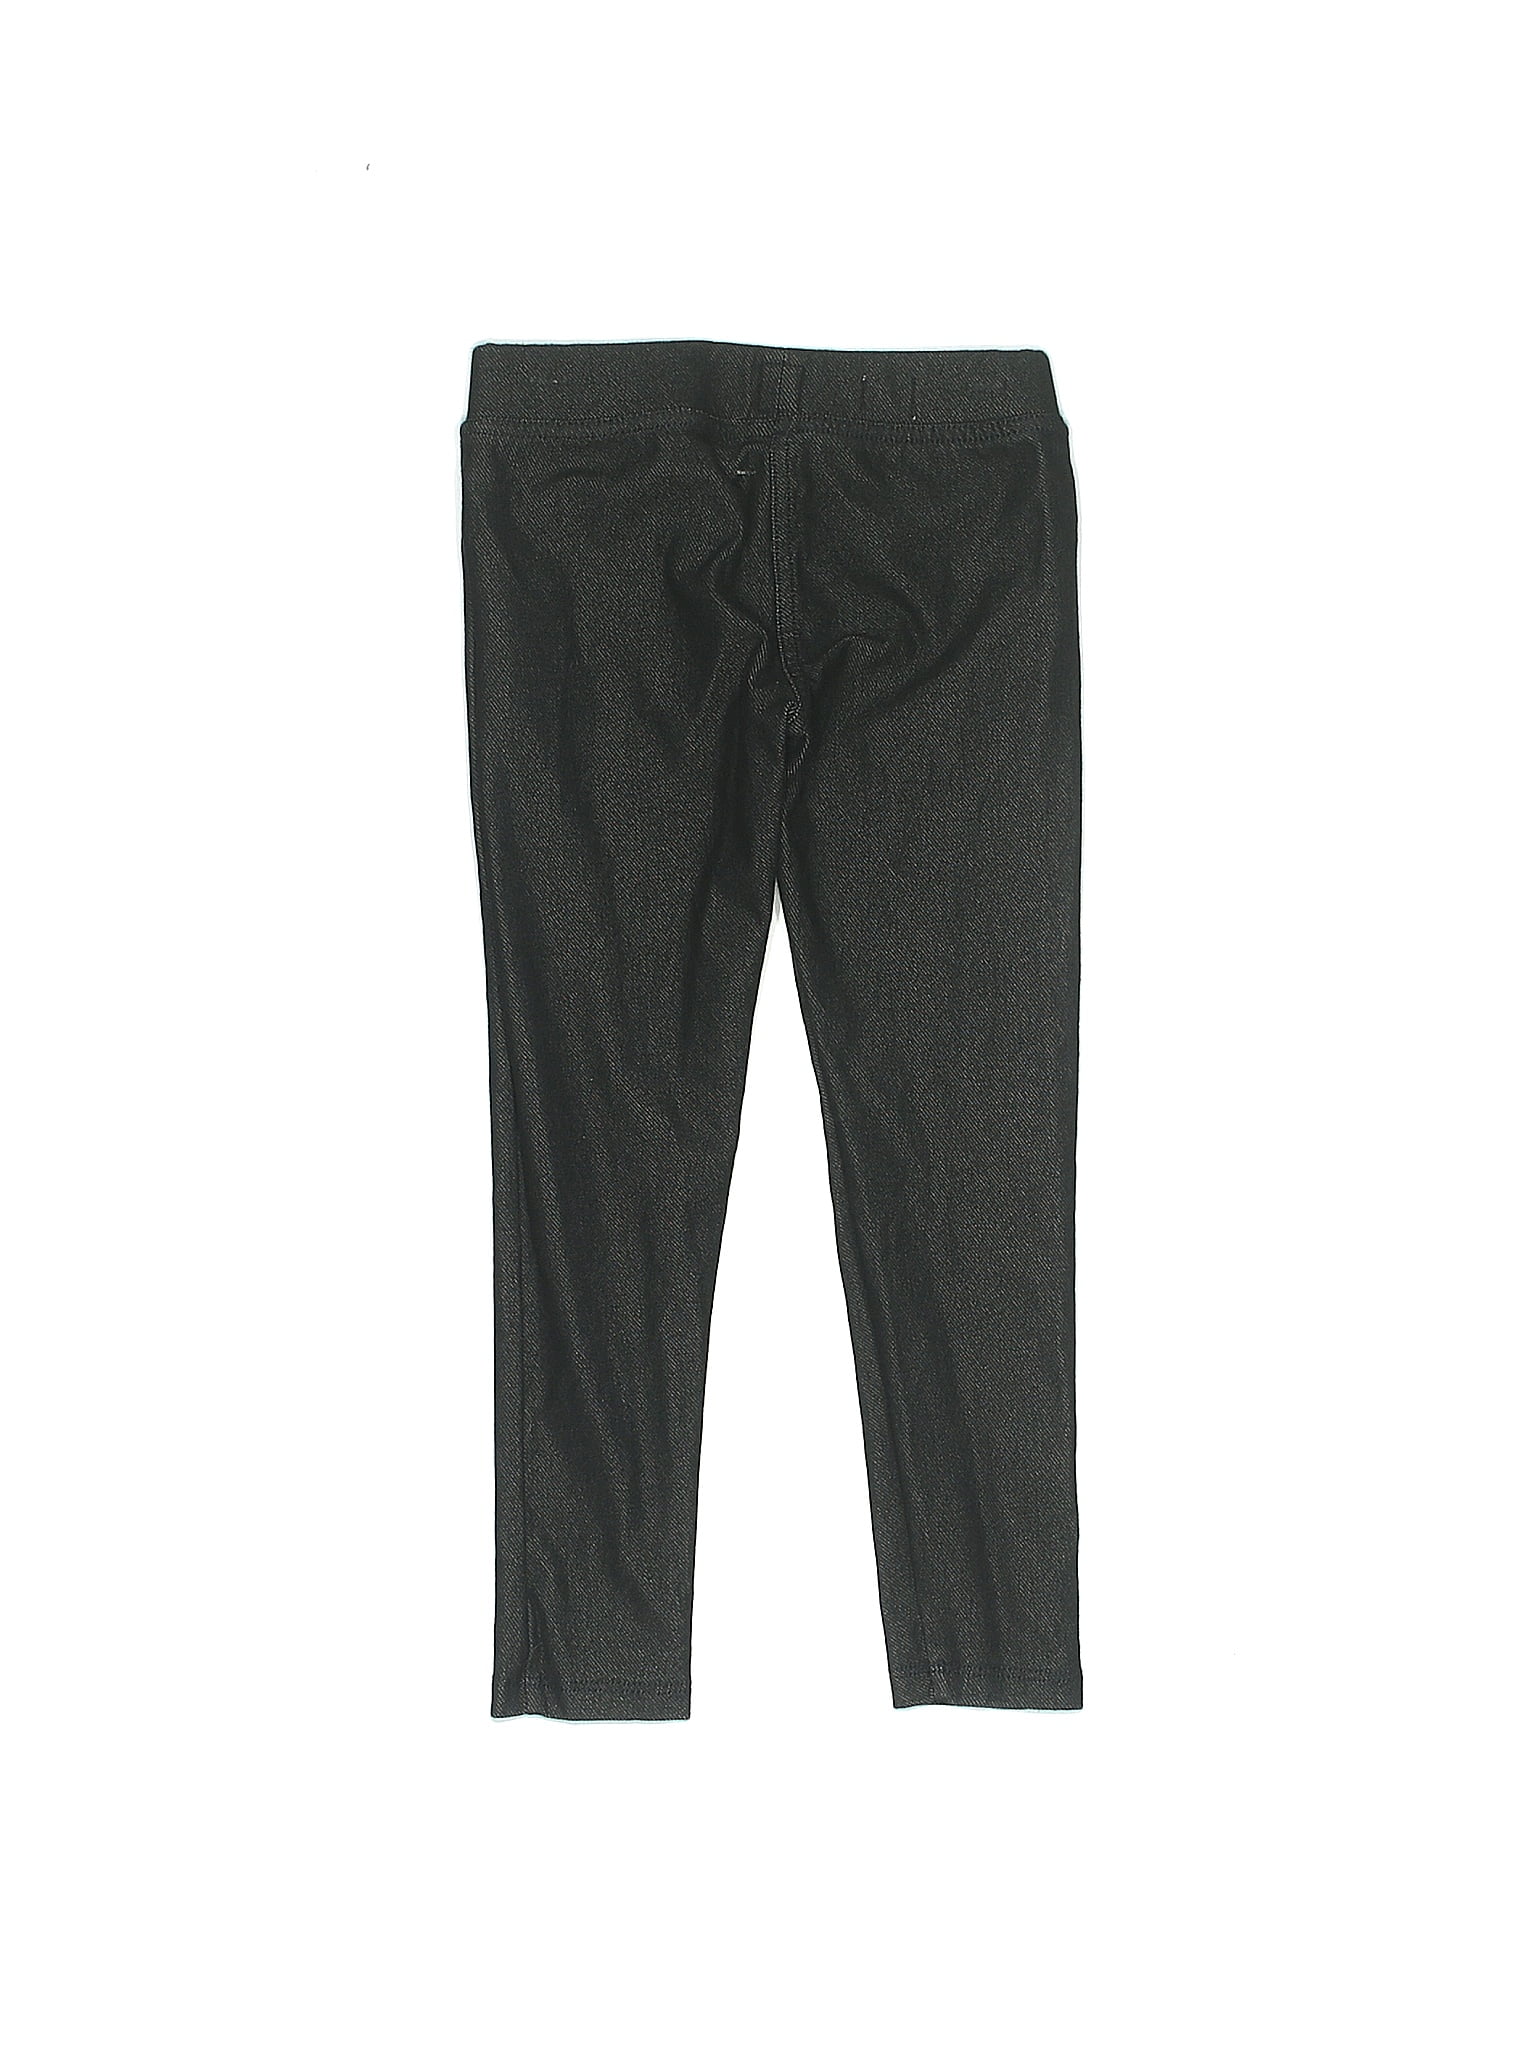 Hanes Black Casual Pants Size XL - 52% off